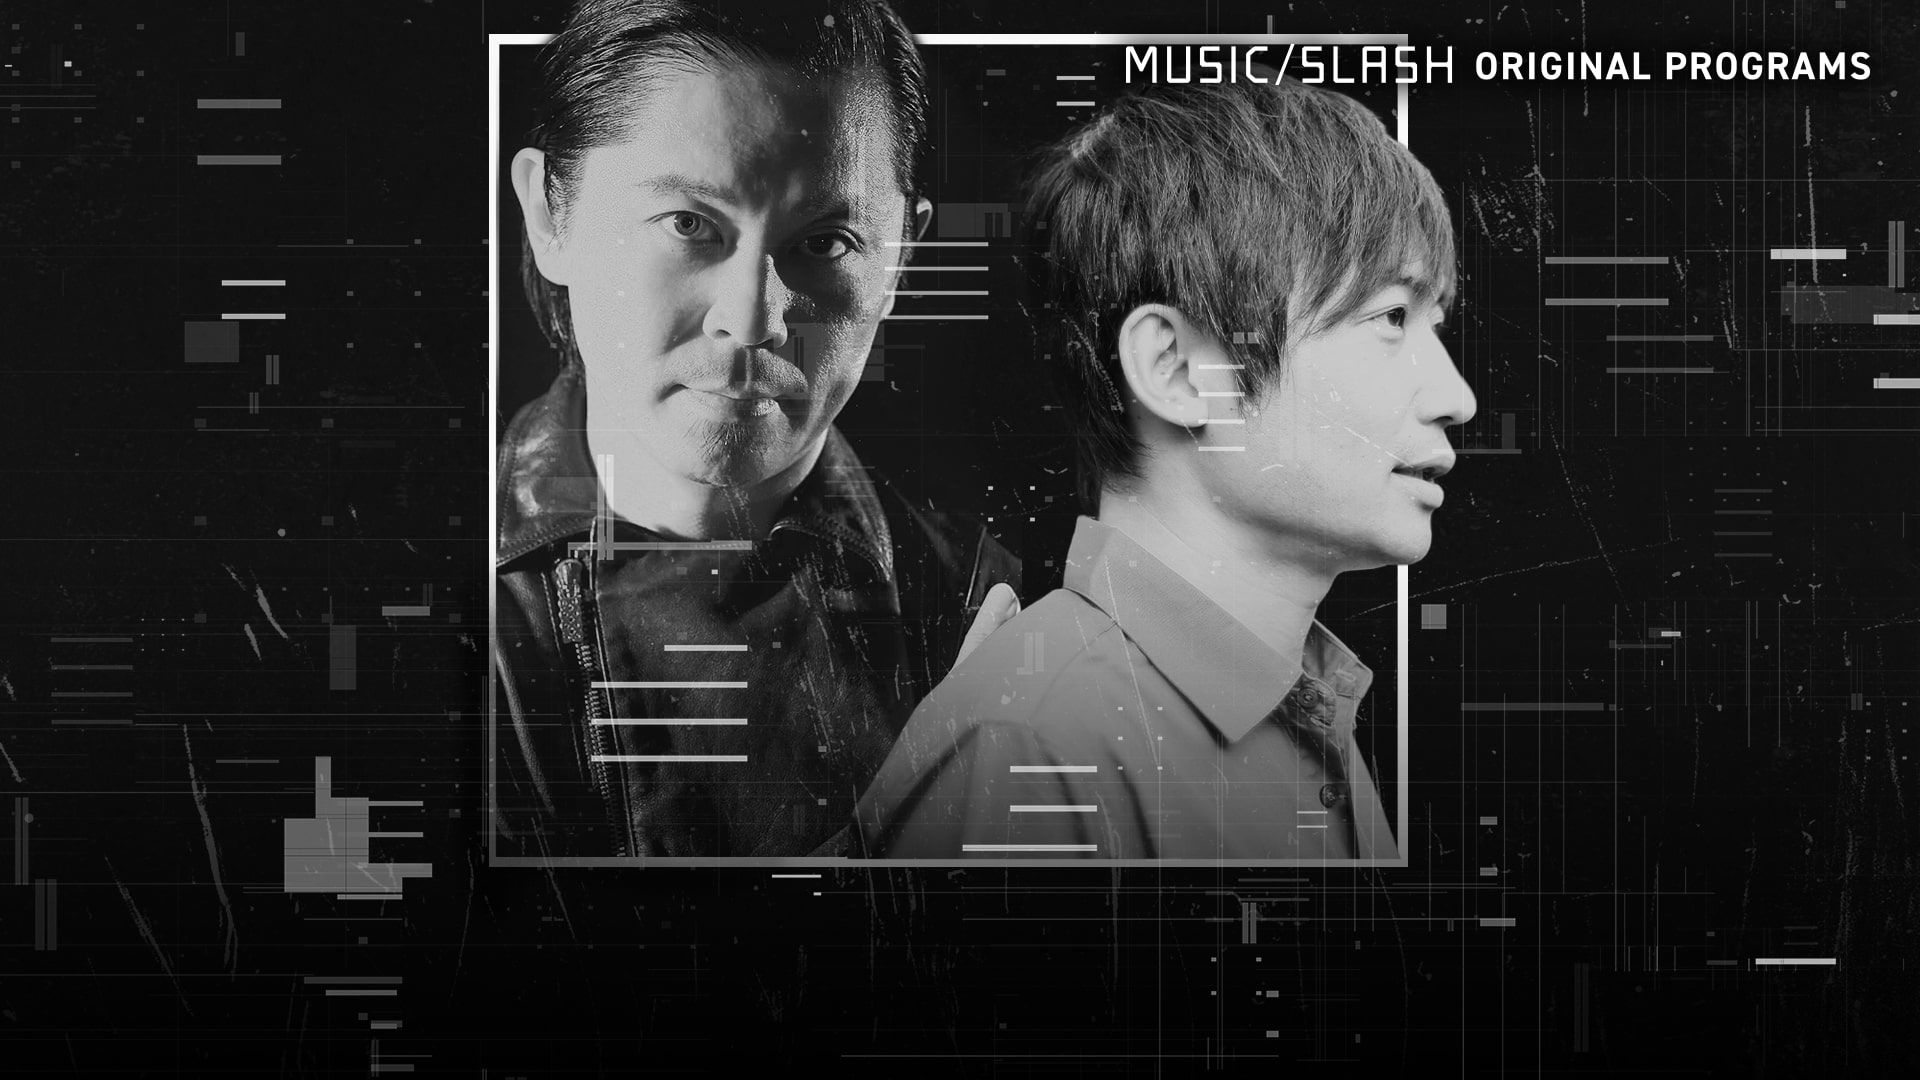 [MUSIC/SLASH] KEN ISHII / ART OF OPERATION | SESSION 03 EXCLUSIVE DJ SETS BY KEN ISHII AND HIROSHI WATANABE